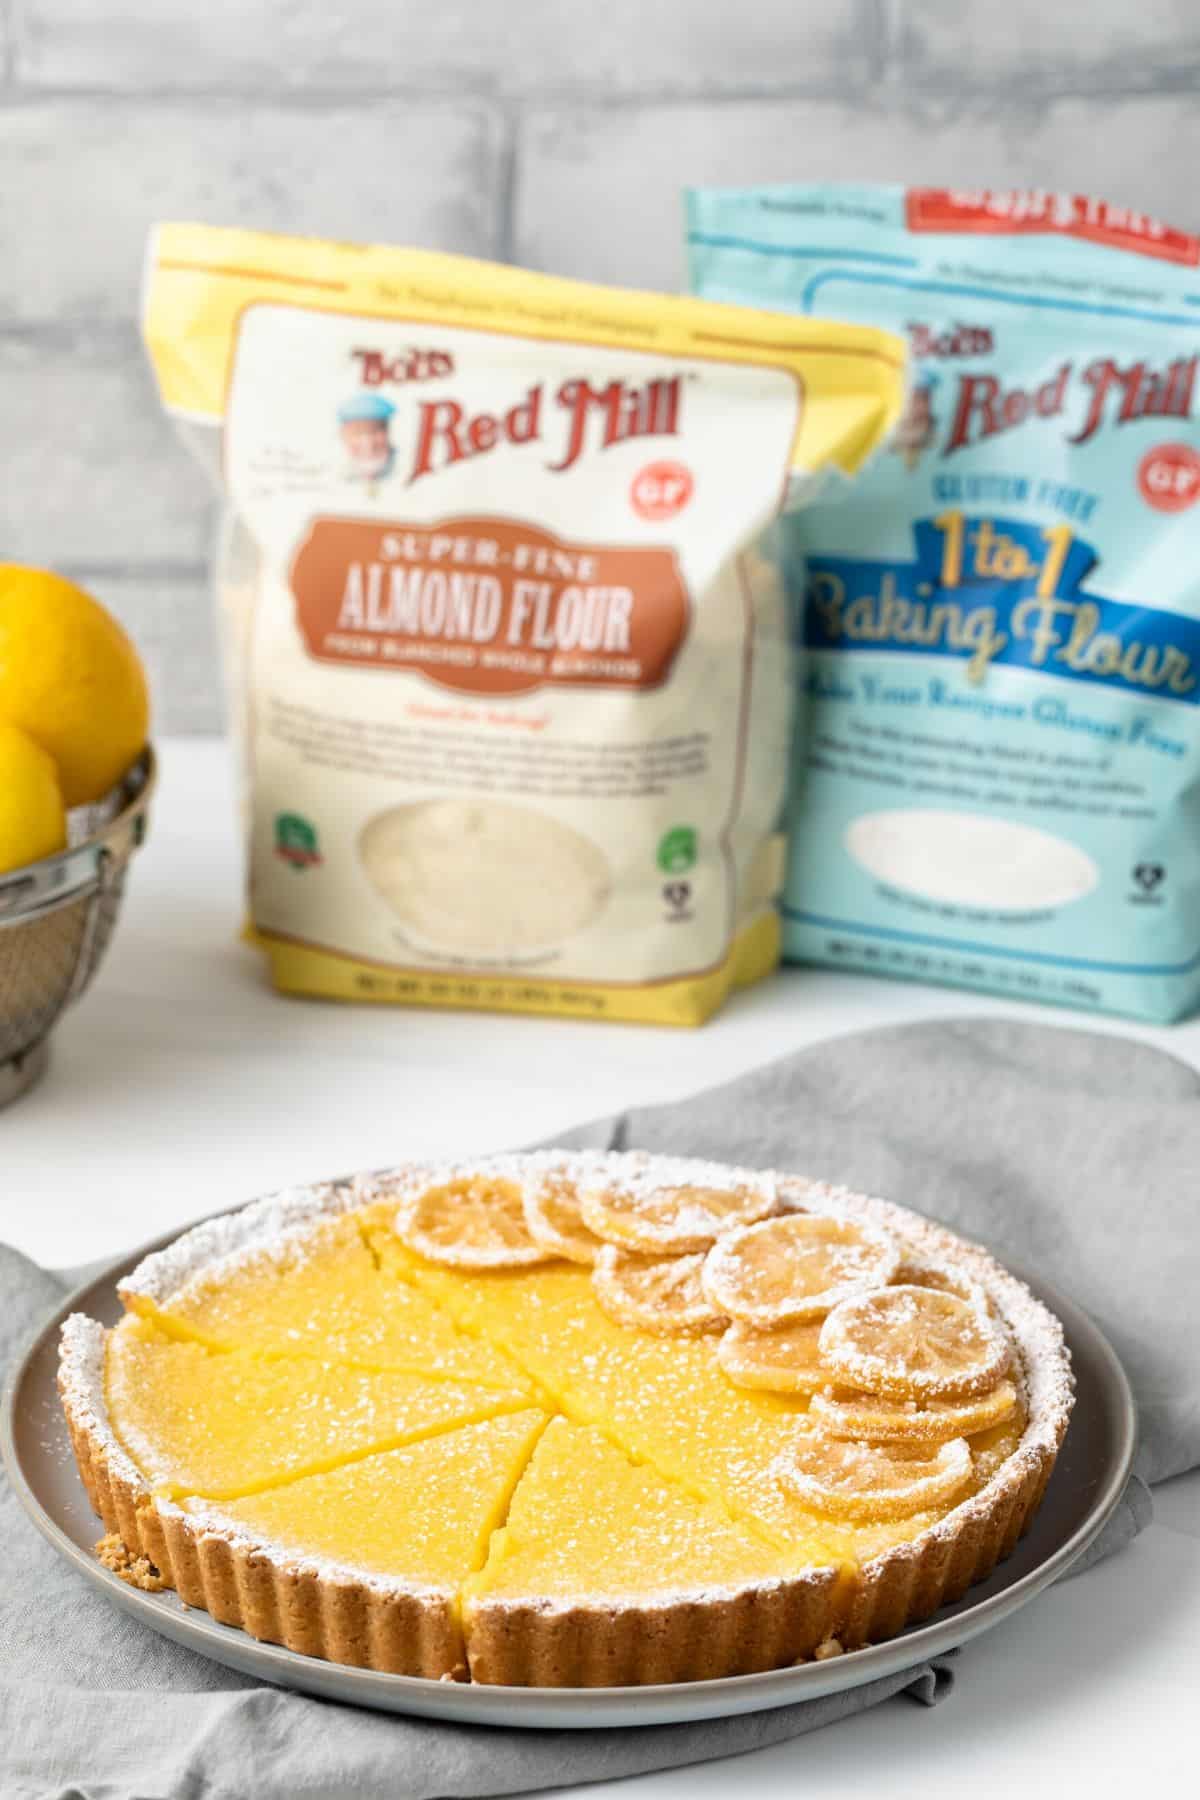 Lemon tart made with Bob's Red Mill flours.